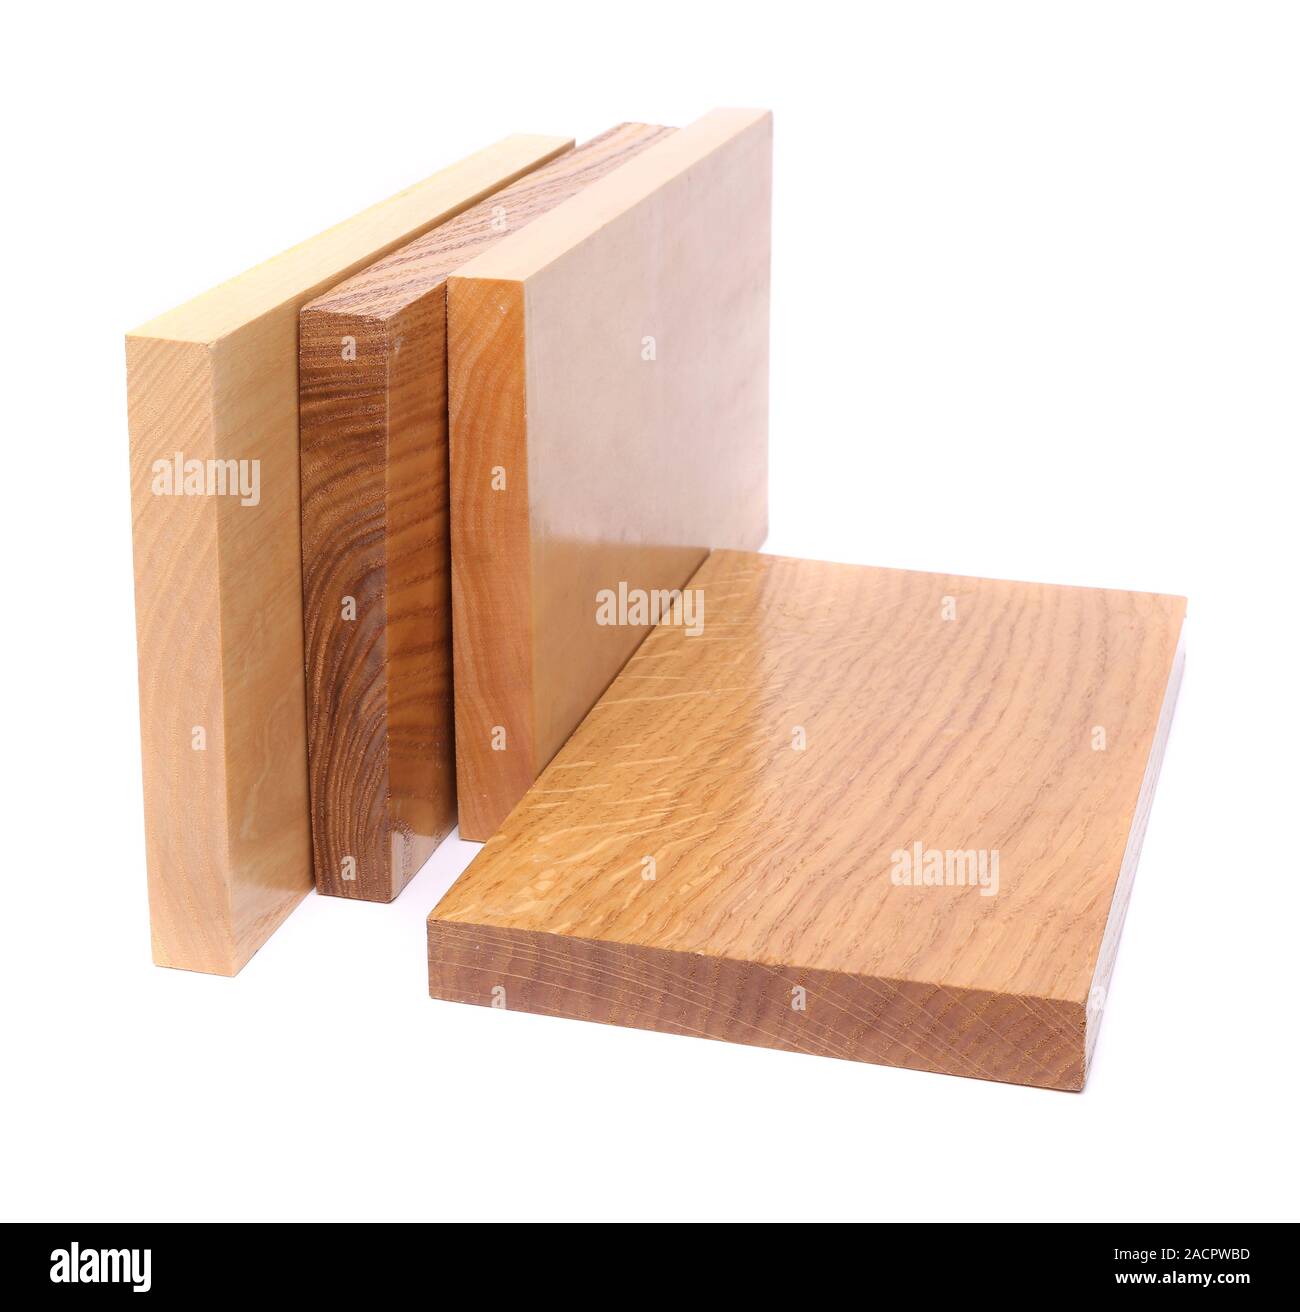 Cuatro tablones de madera close-up Foto de stock